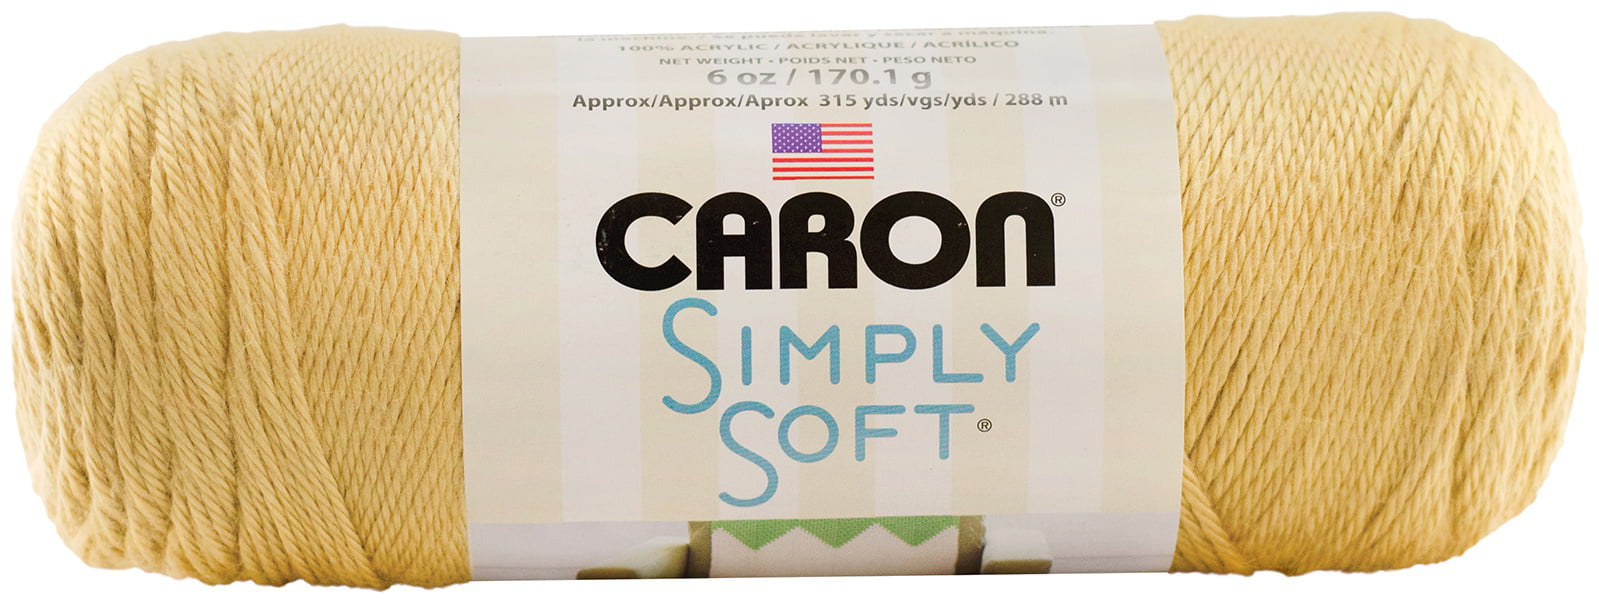 2-pack Caron Simply Soft Yarn Solids Autumn Maize Bulk Buy